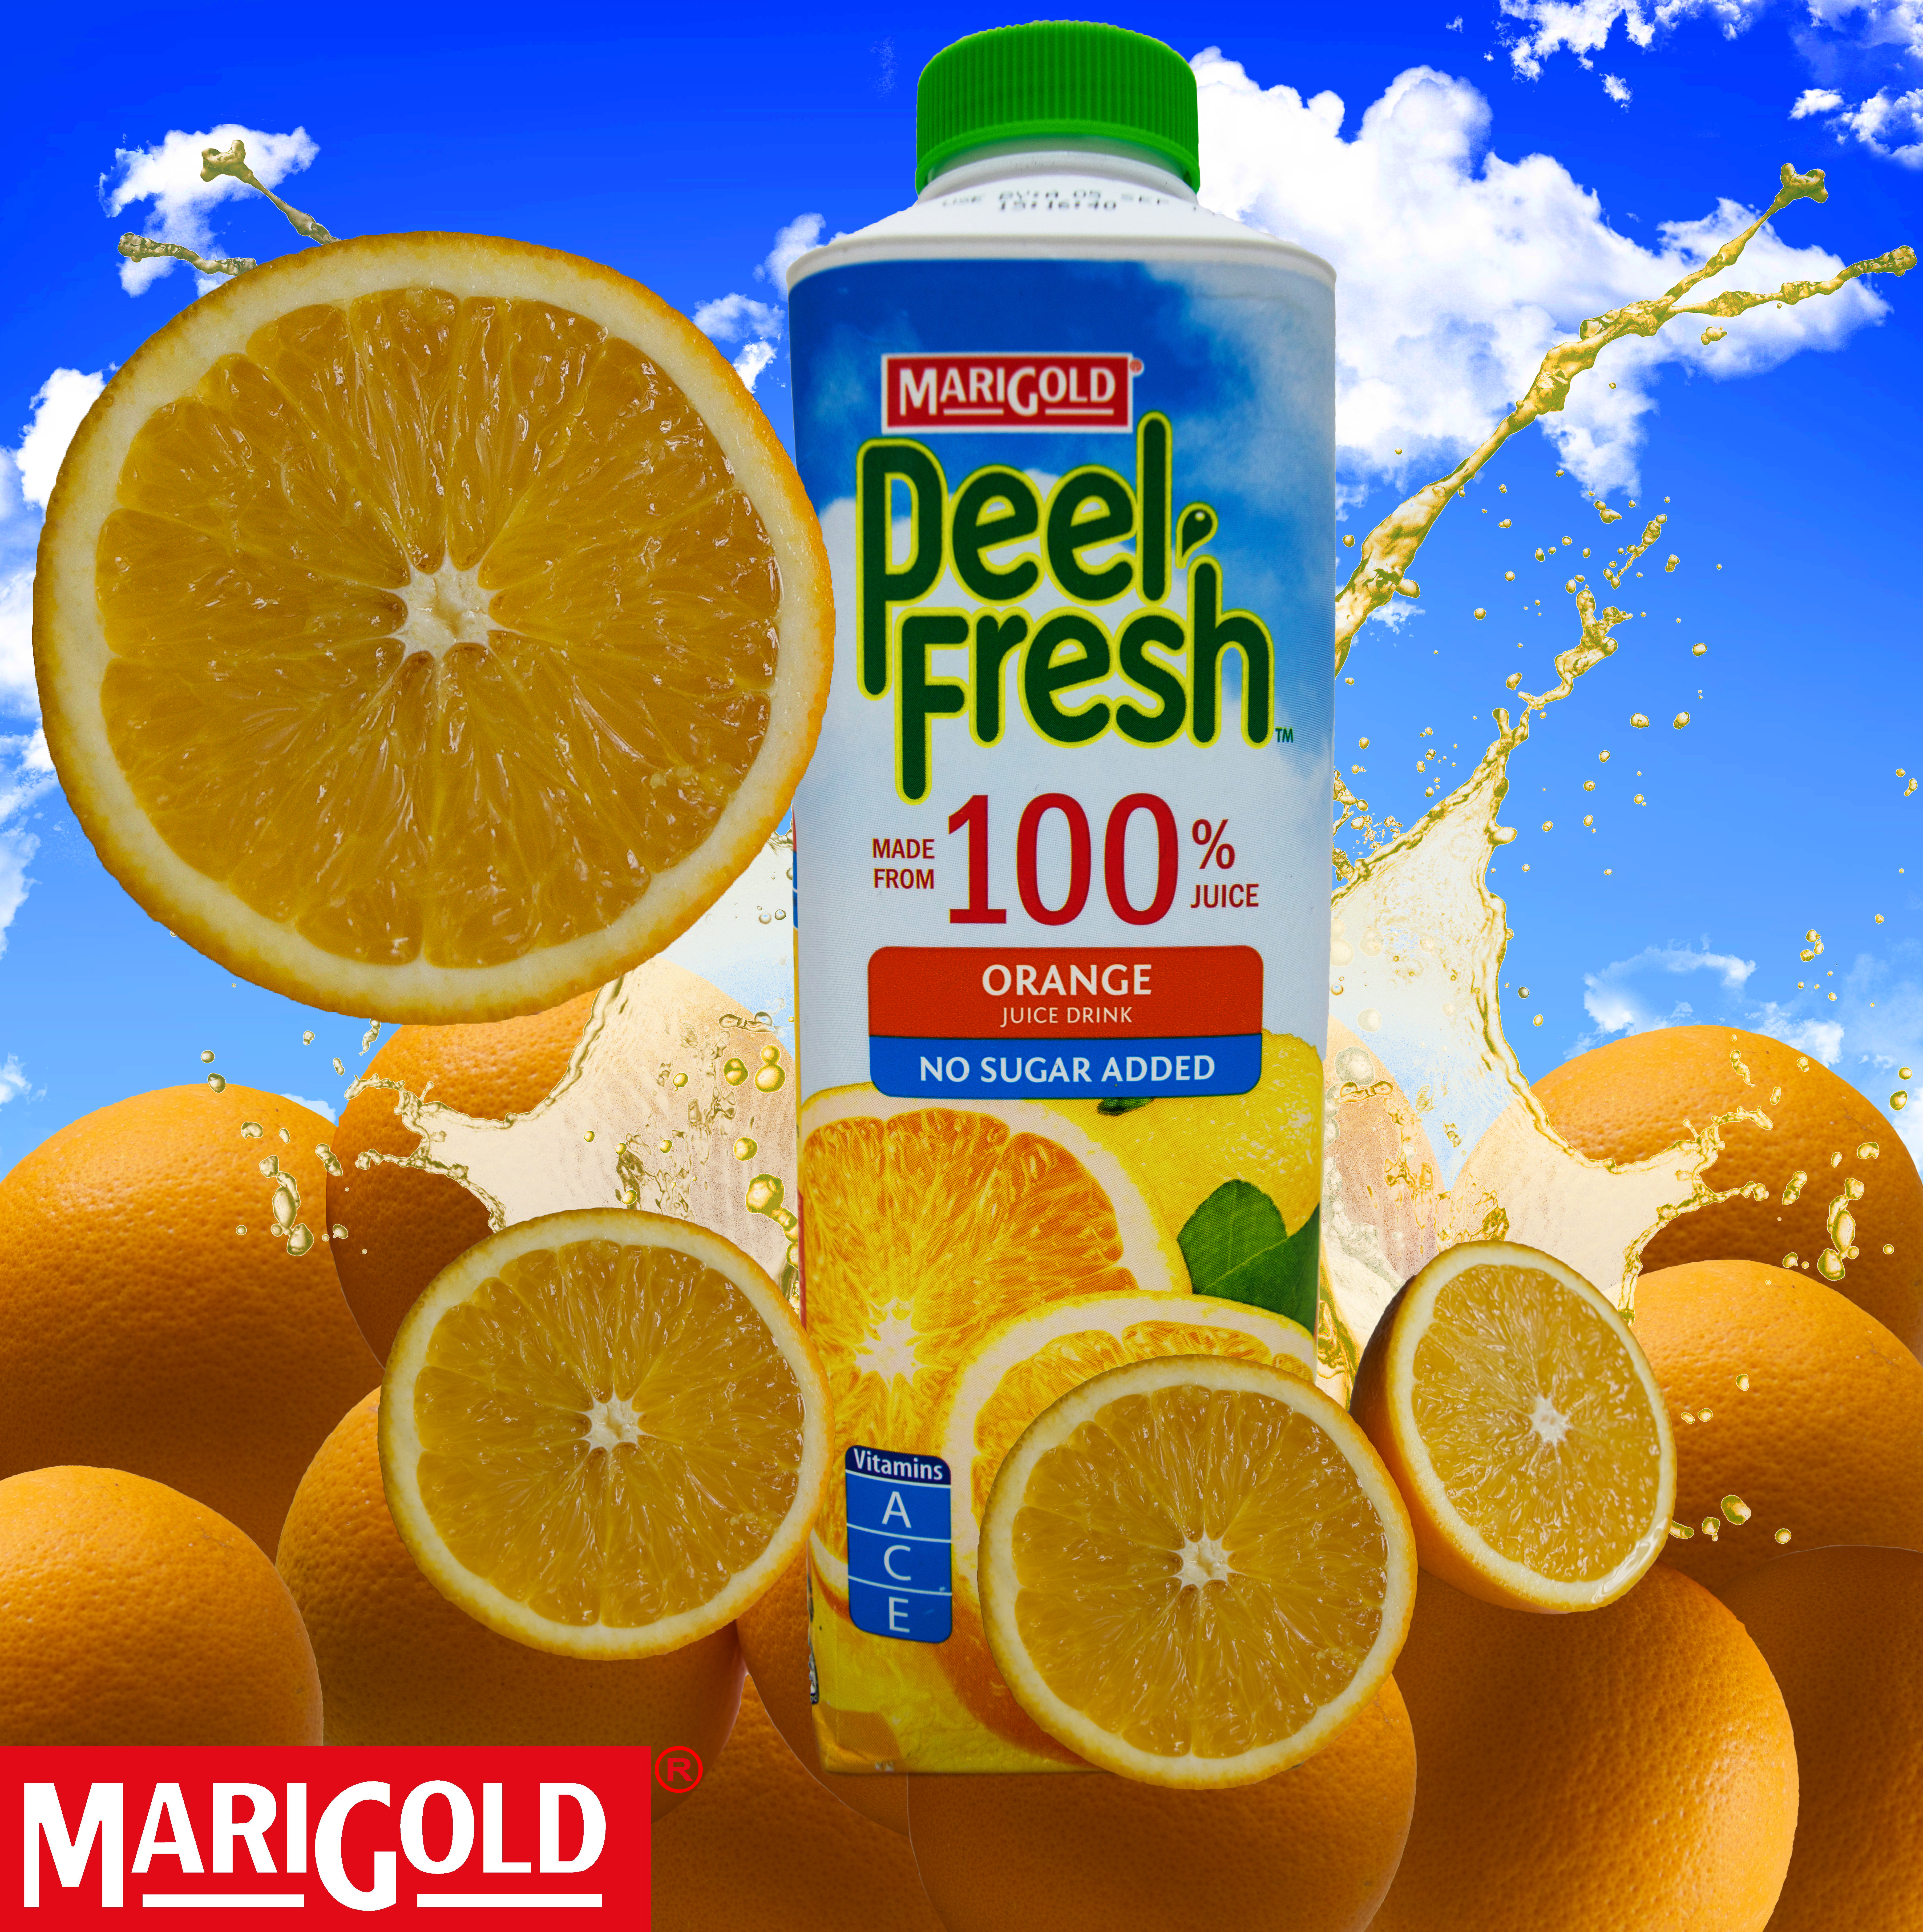 Marigold Peel Fresh Commercial Poster